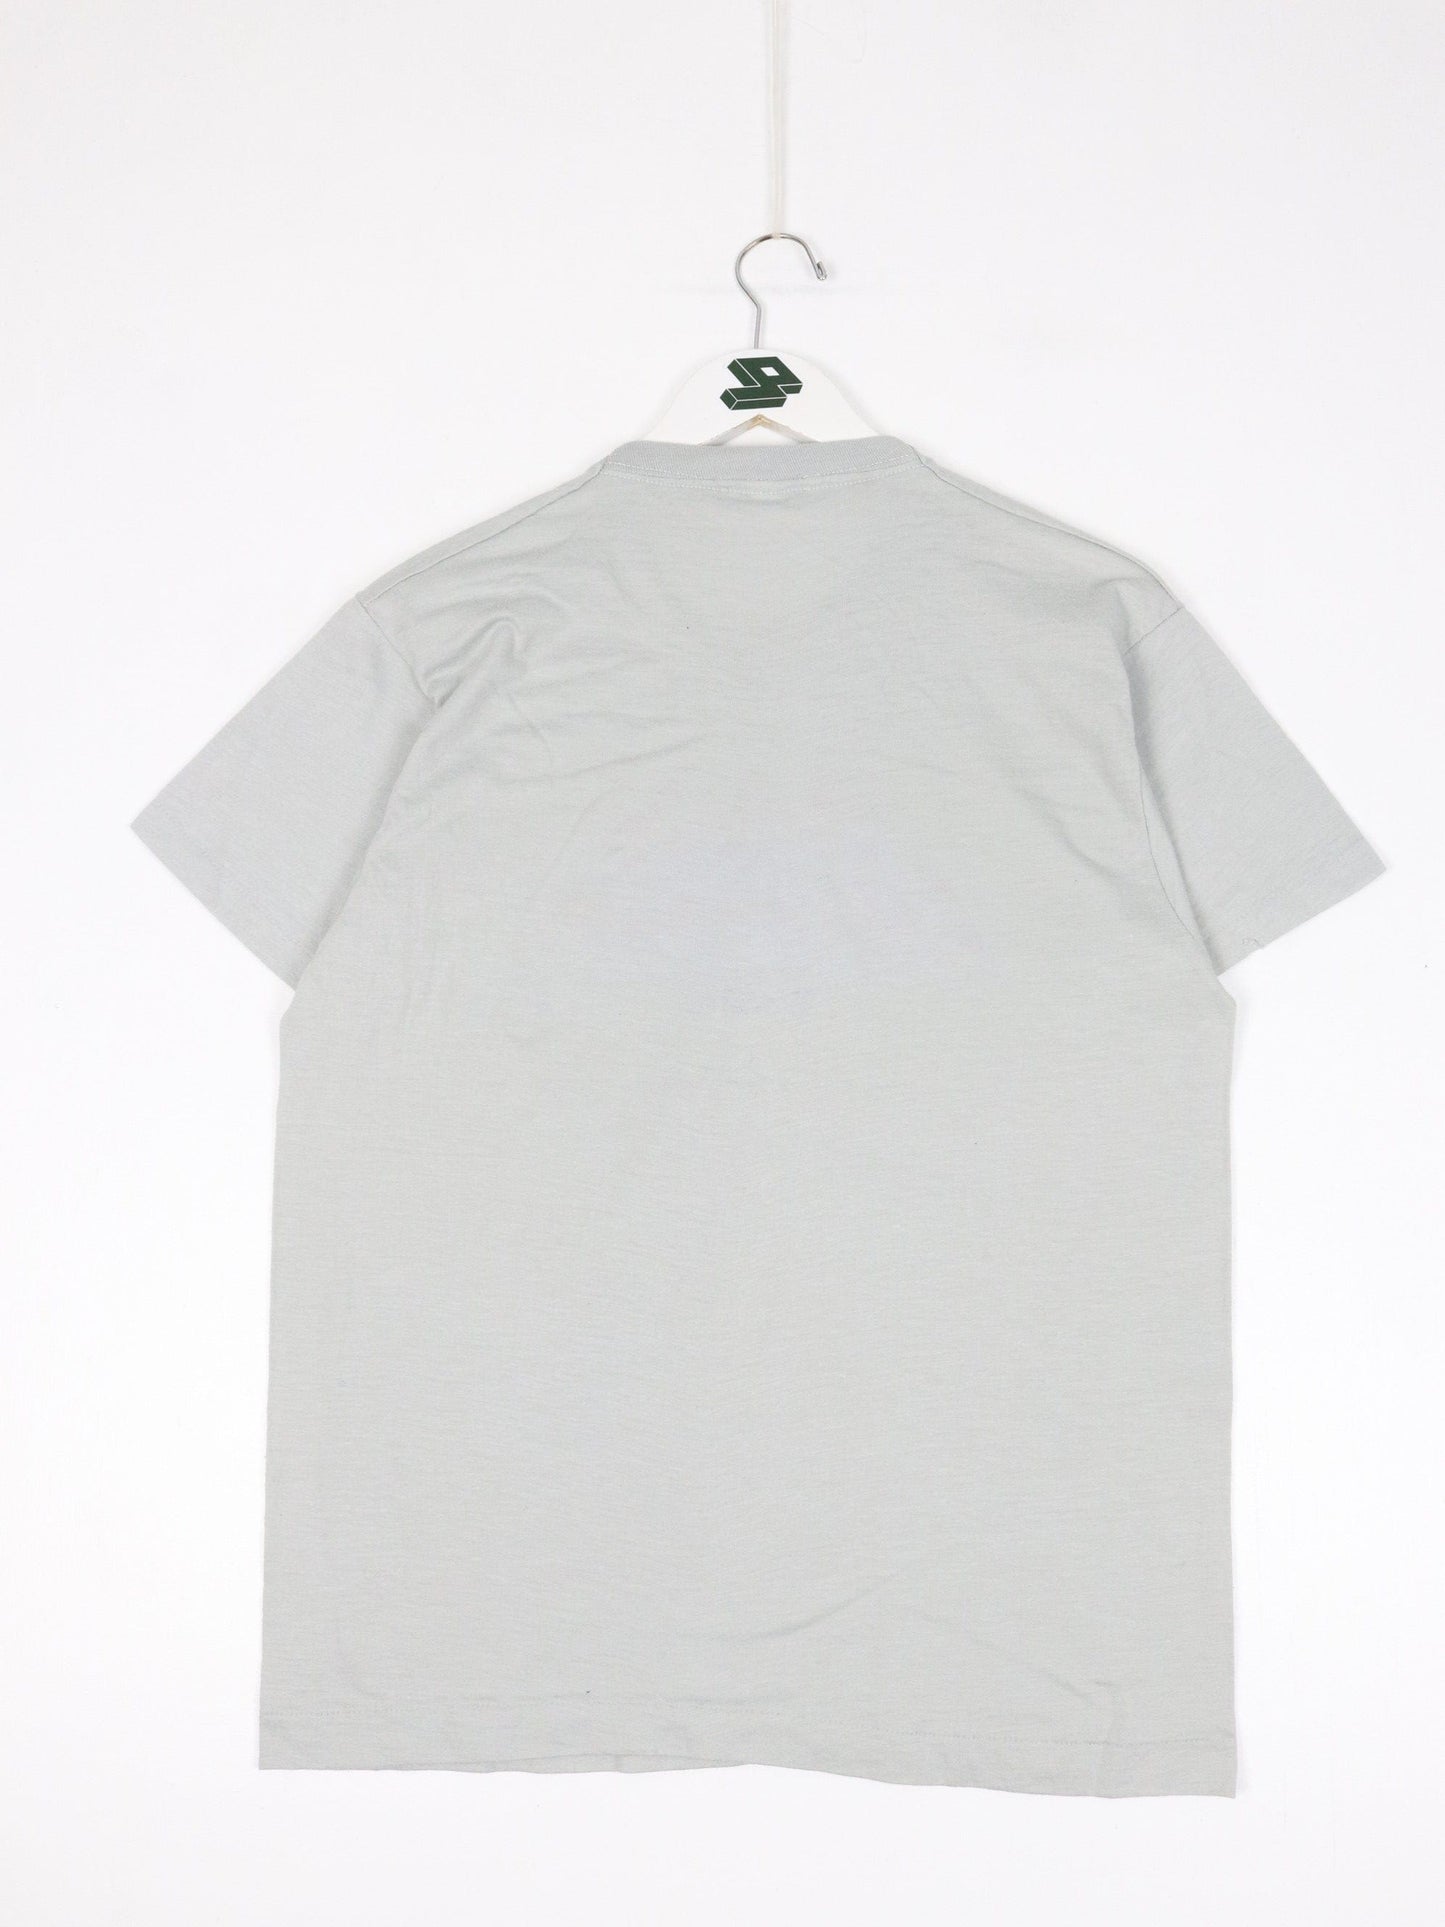 Other T-Shirts & Tank Tops Vintage Brian Stormers T Shirt Fits Mens Medium Grey 90s WXXI TV Promo